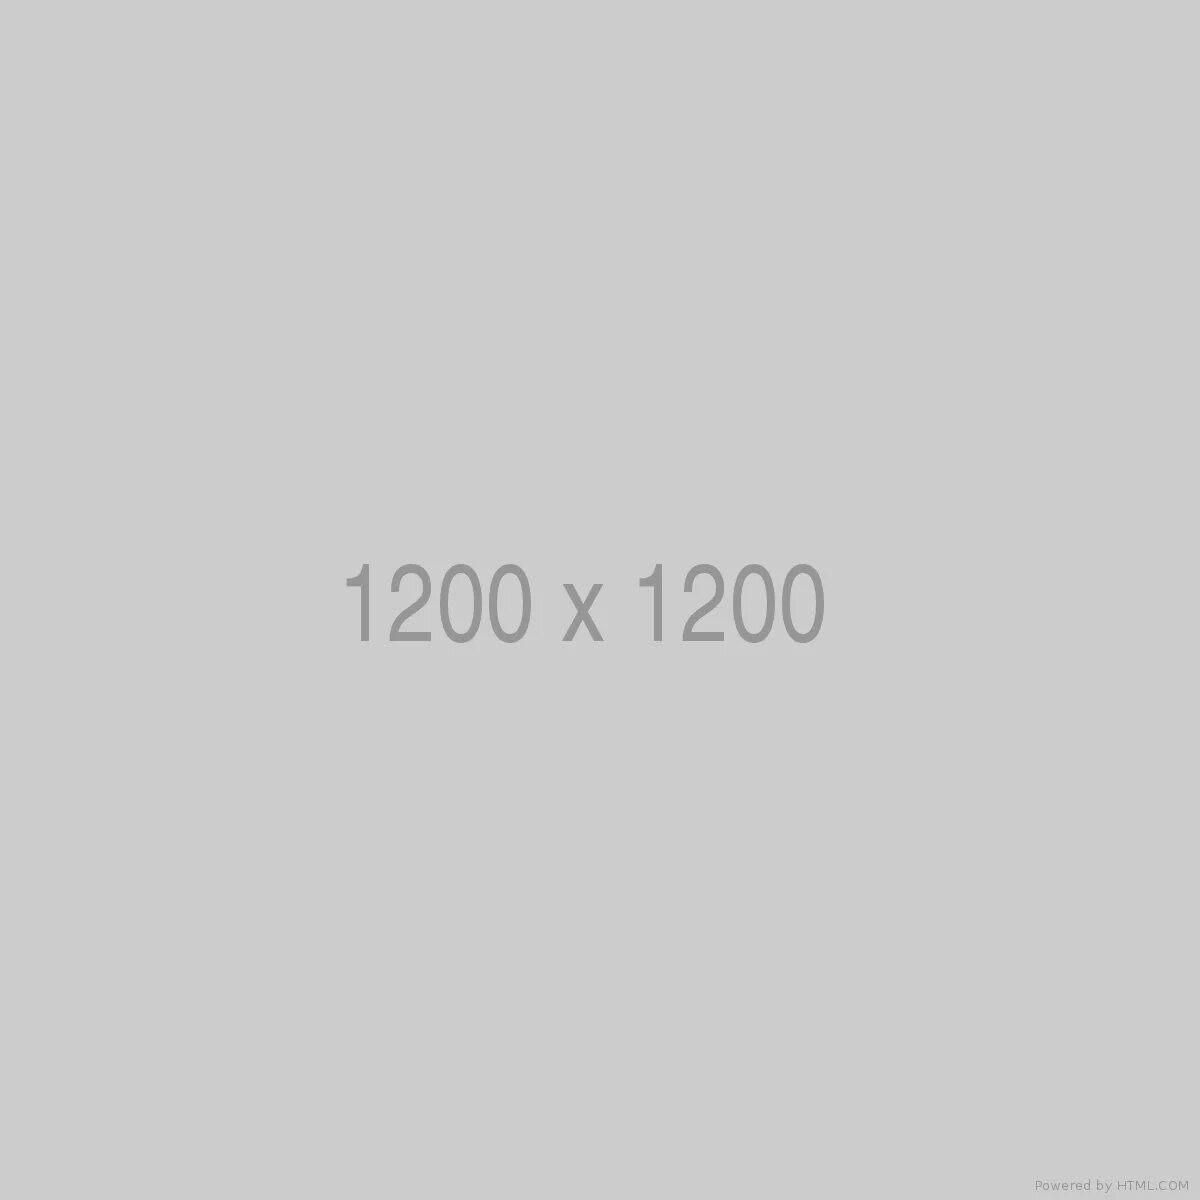 200 10 67. 200 На 200. 200 На 200 пикселей. Изображение 200x200. 200x200 картинки.